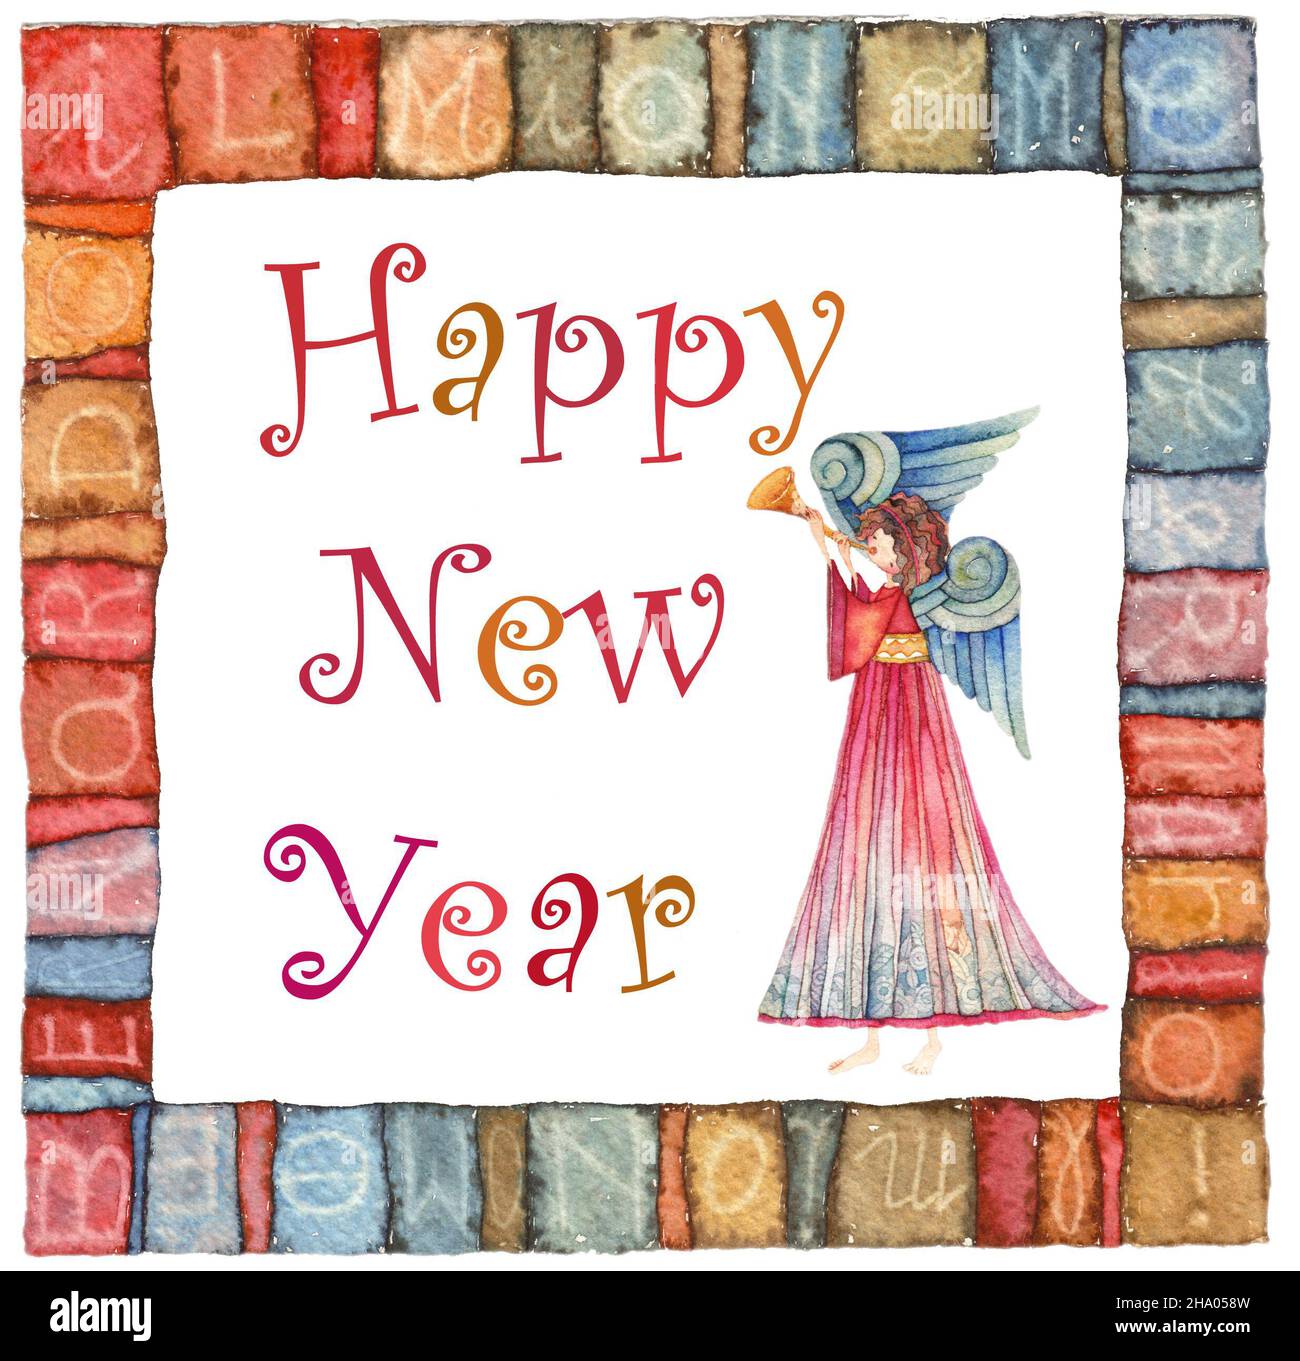 Happy new year angel Stock Photo